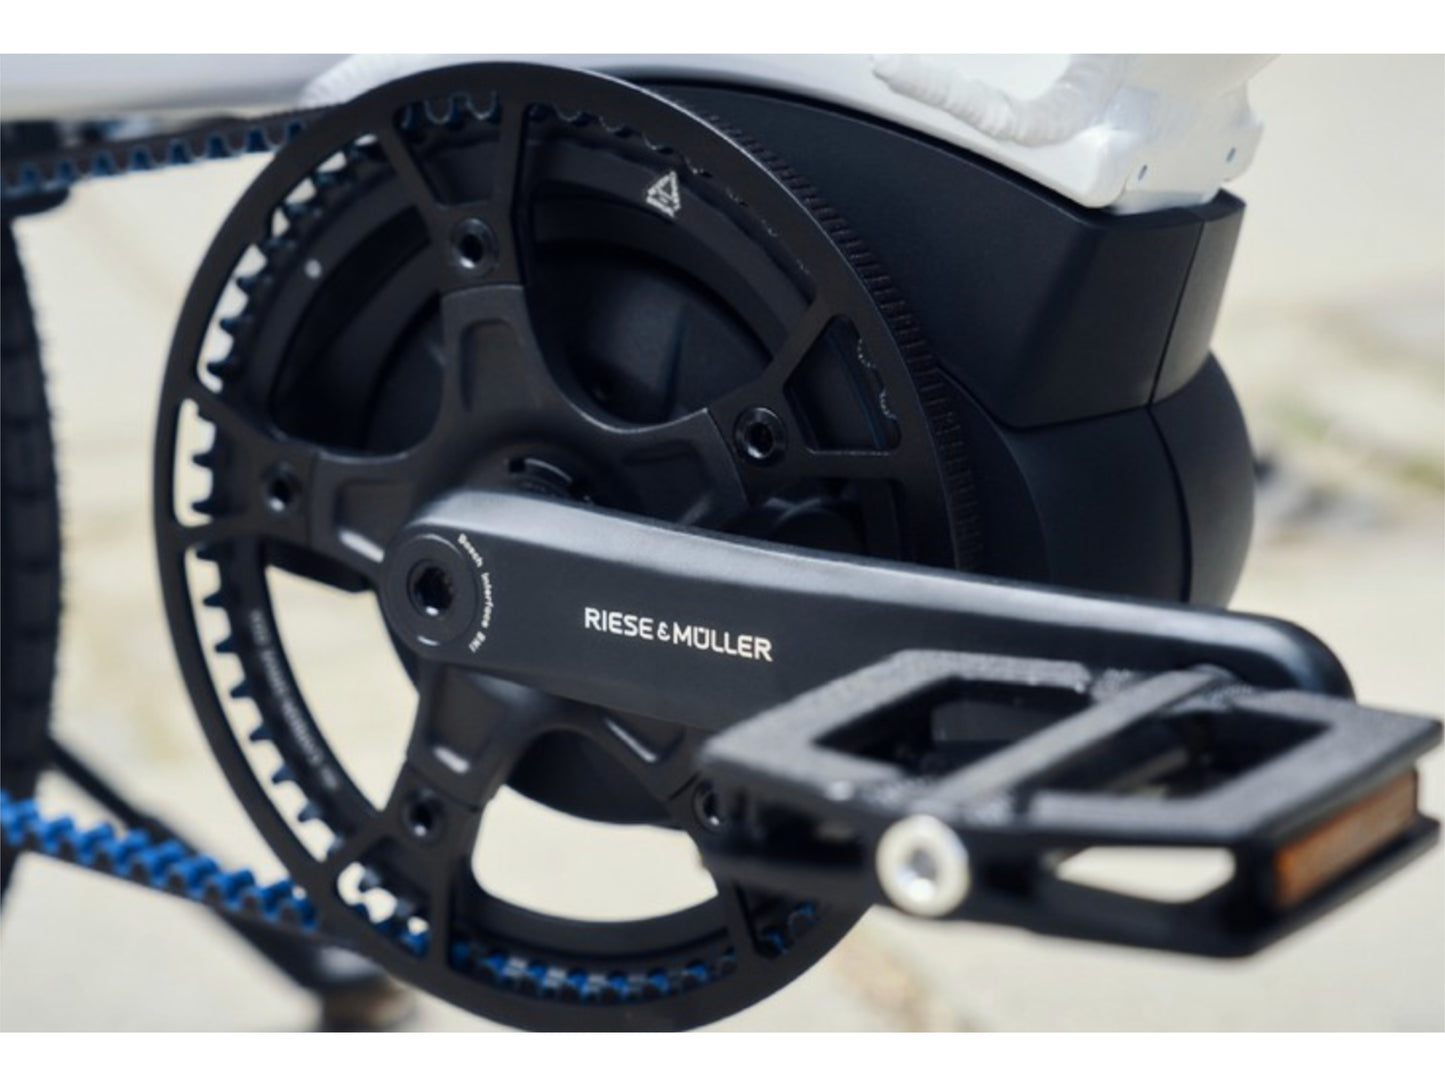 Riese & Muller Tinker2 Vario eMtb hardtail close up crankset pedals